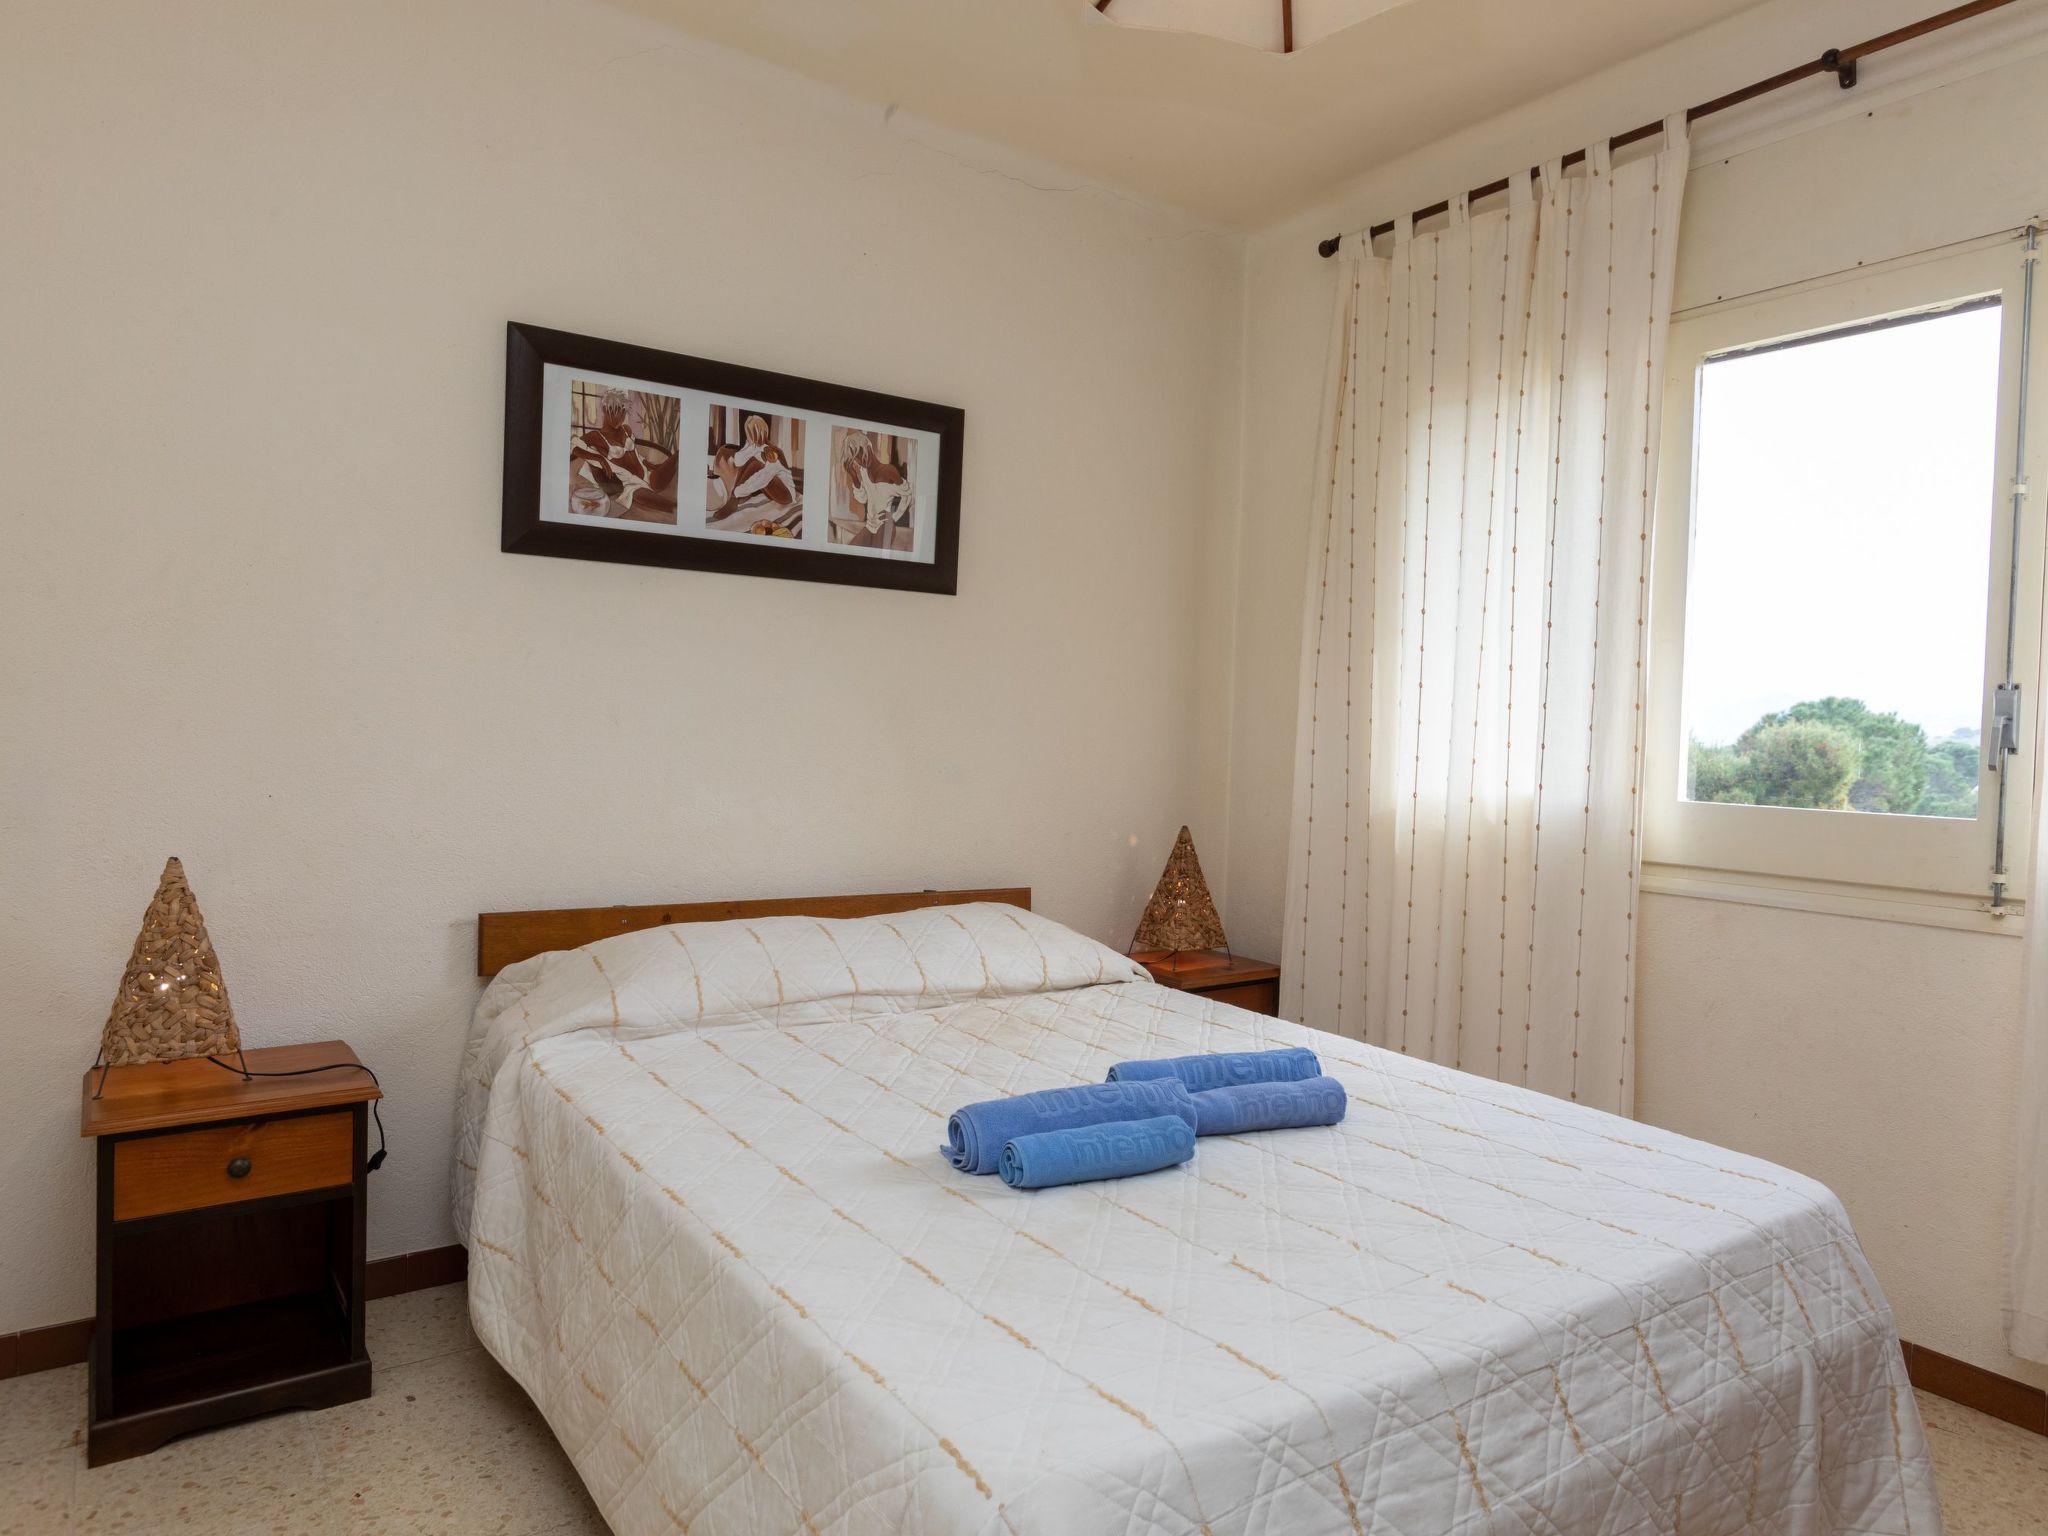 Photo 5 - Appartement de 3 chambres à El Port de la Selva avec jardin et vues à la mer